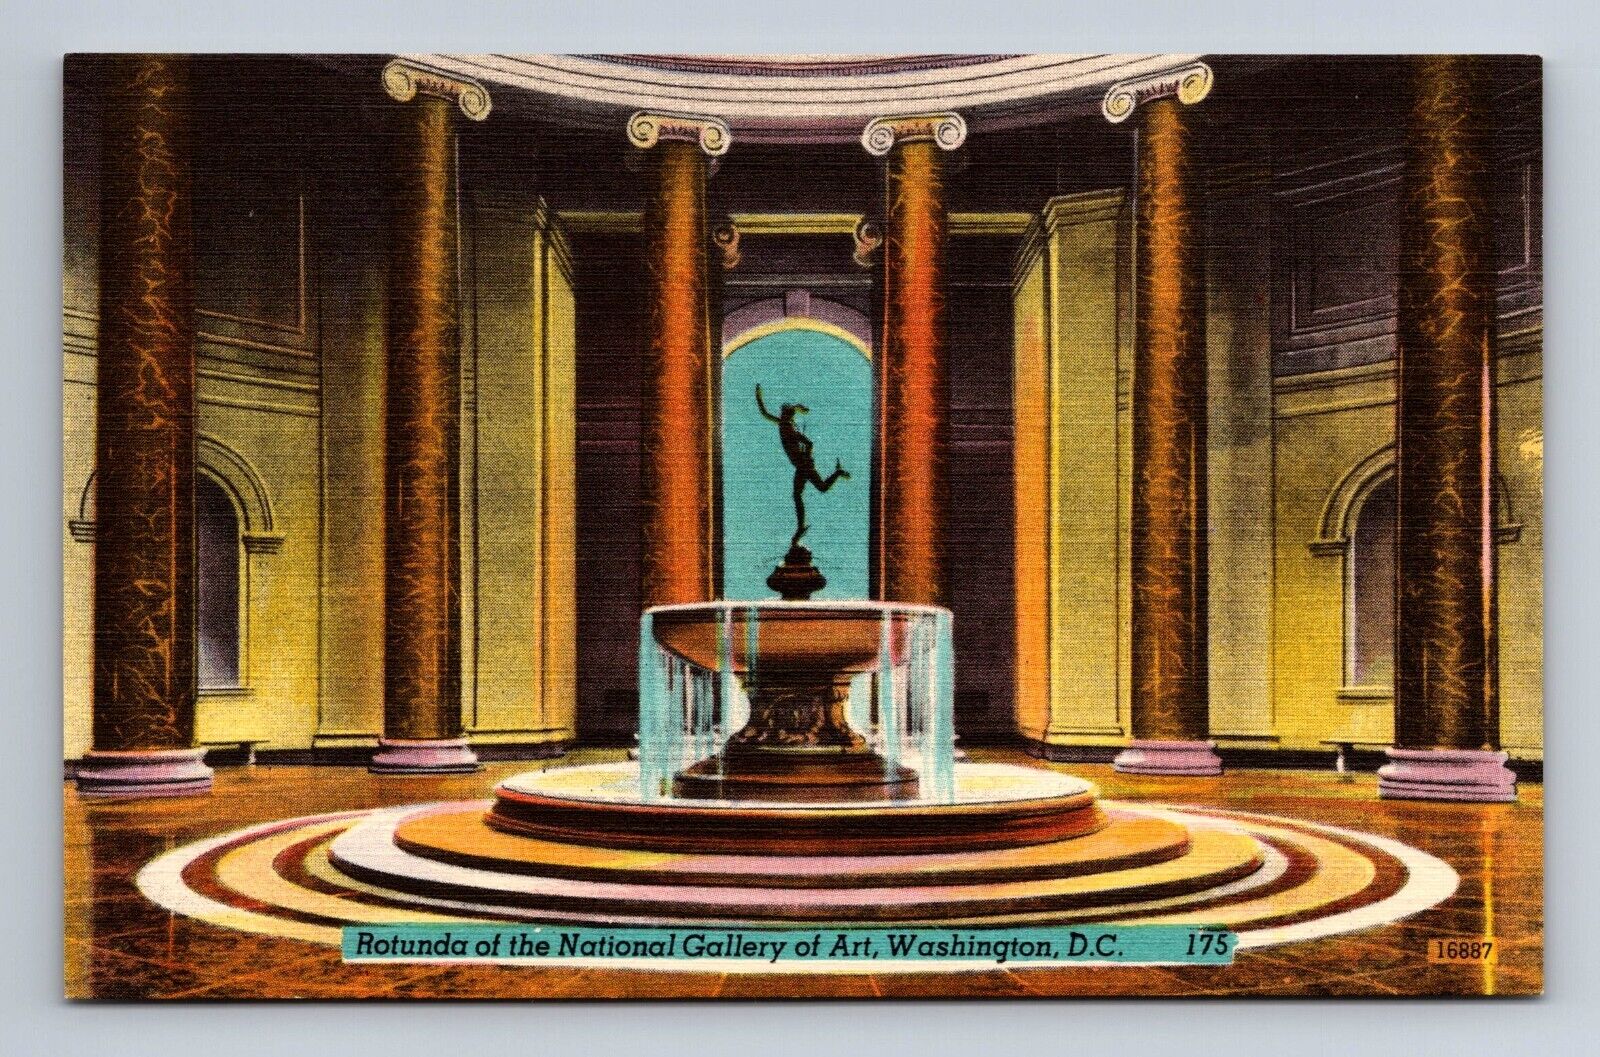 Rotunda of the National Gallery of Art Washington D.C. Linen Postcard